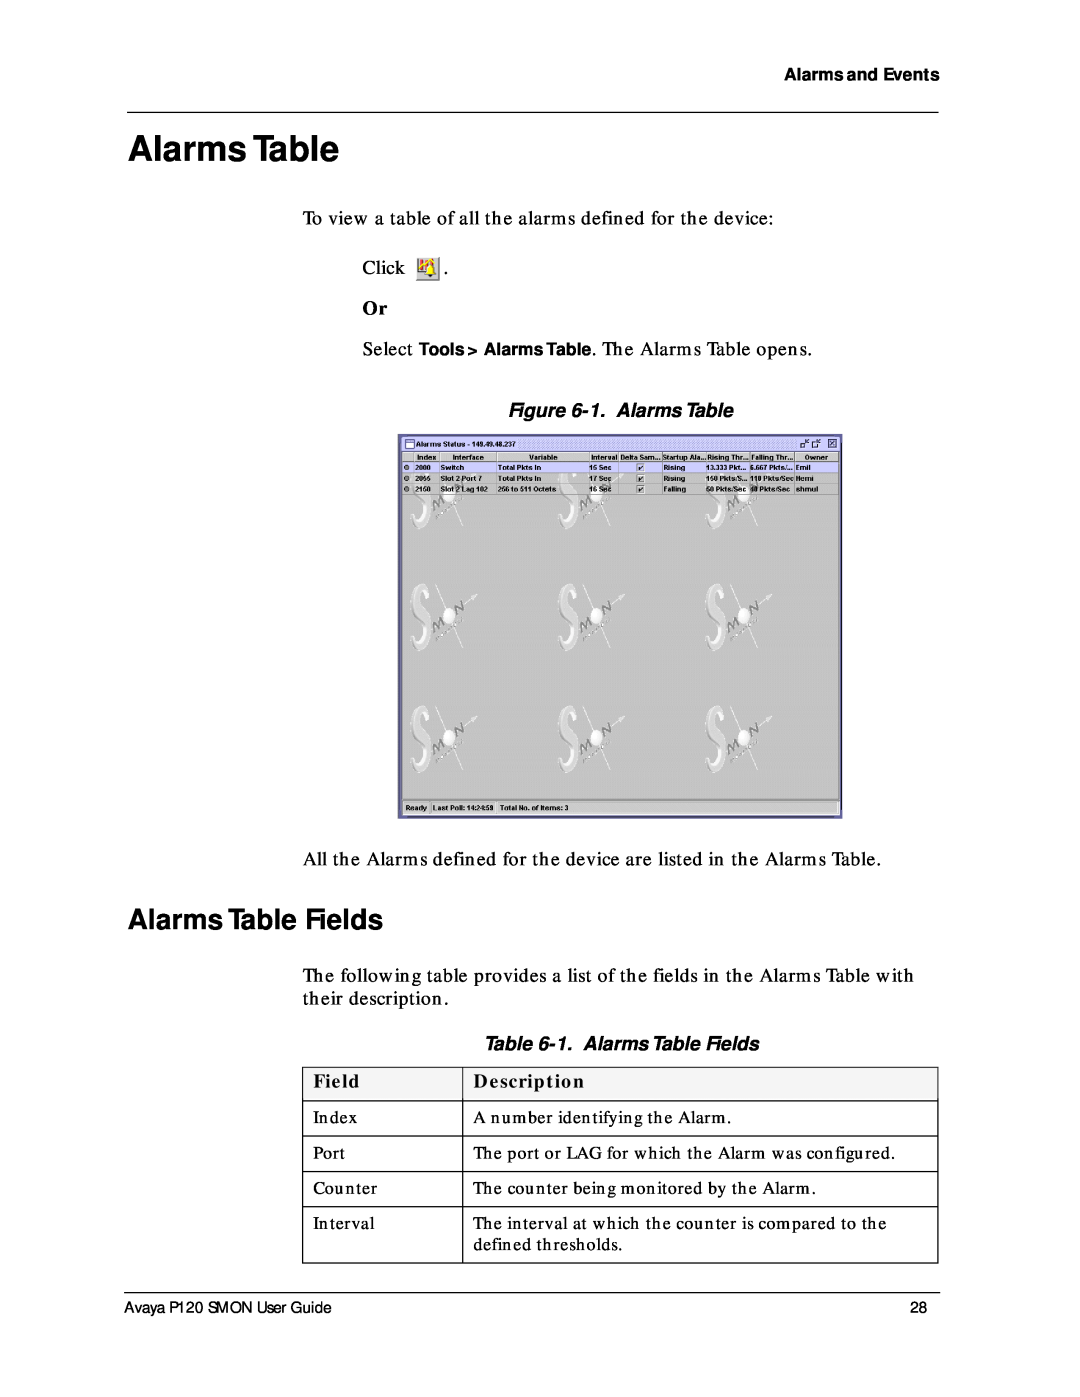 Avaya P120 SMON manual 1. Alarms Table Fields 